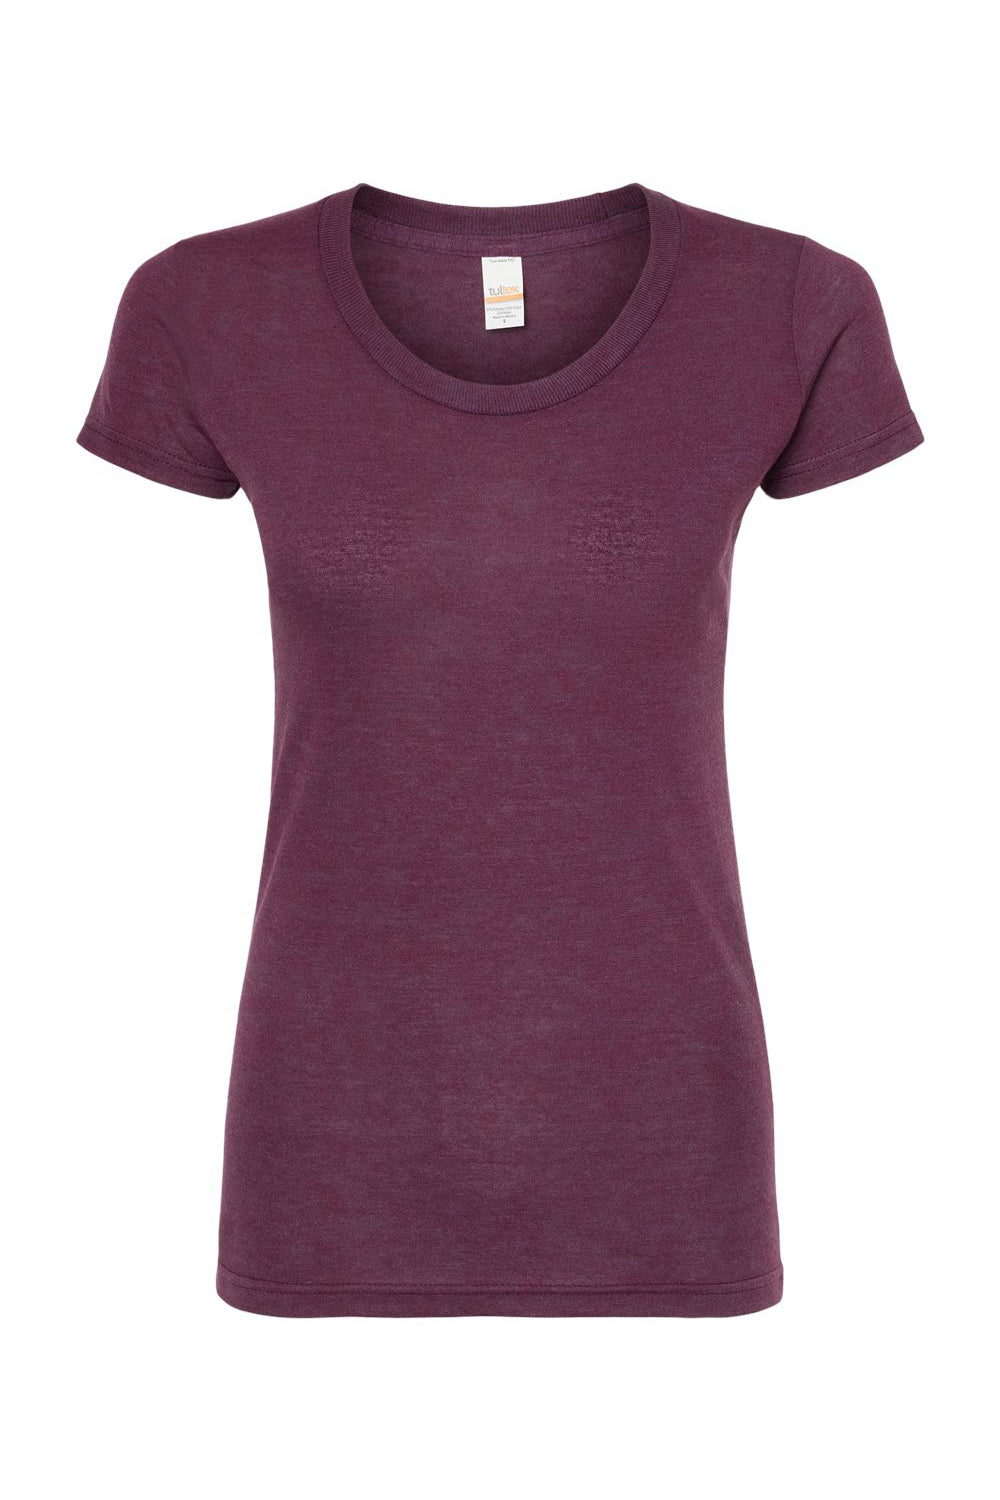 Tultex 253 Womens Short Sleeve Crewneck T-Shirt Berry Purple Flat Front